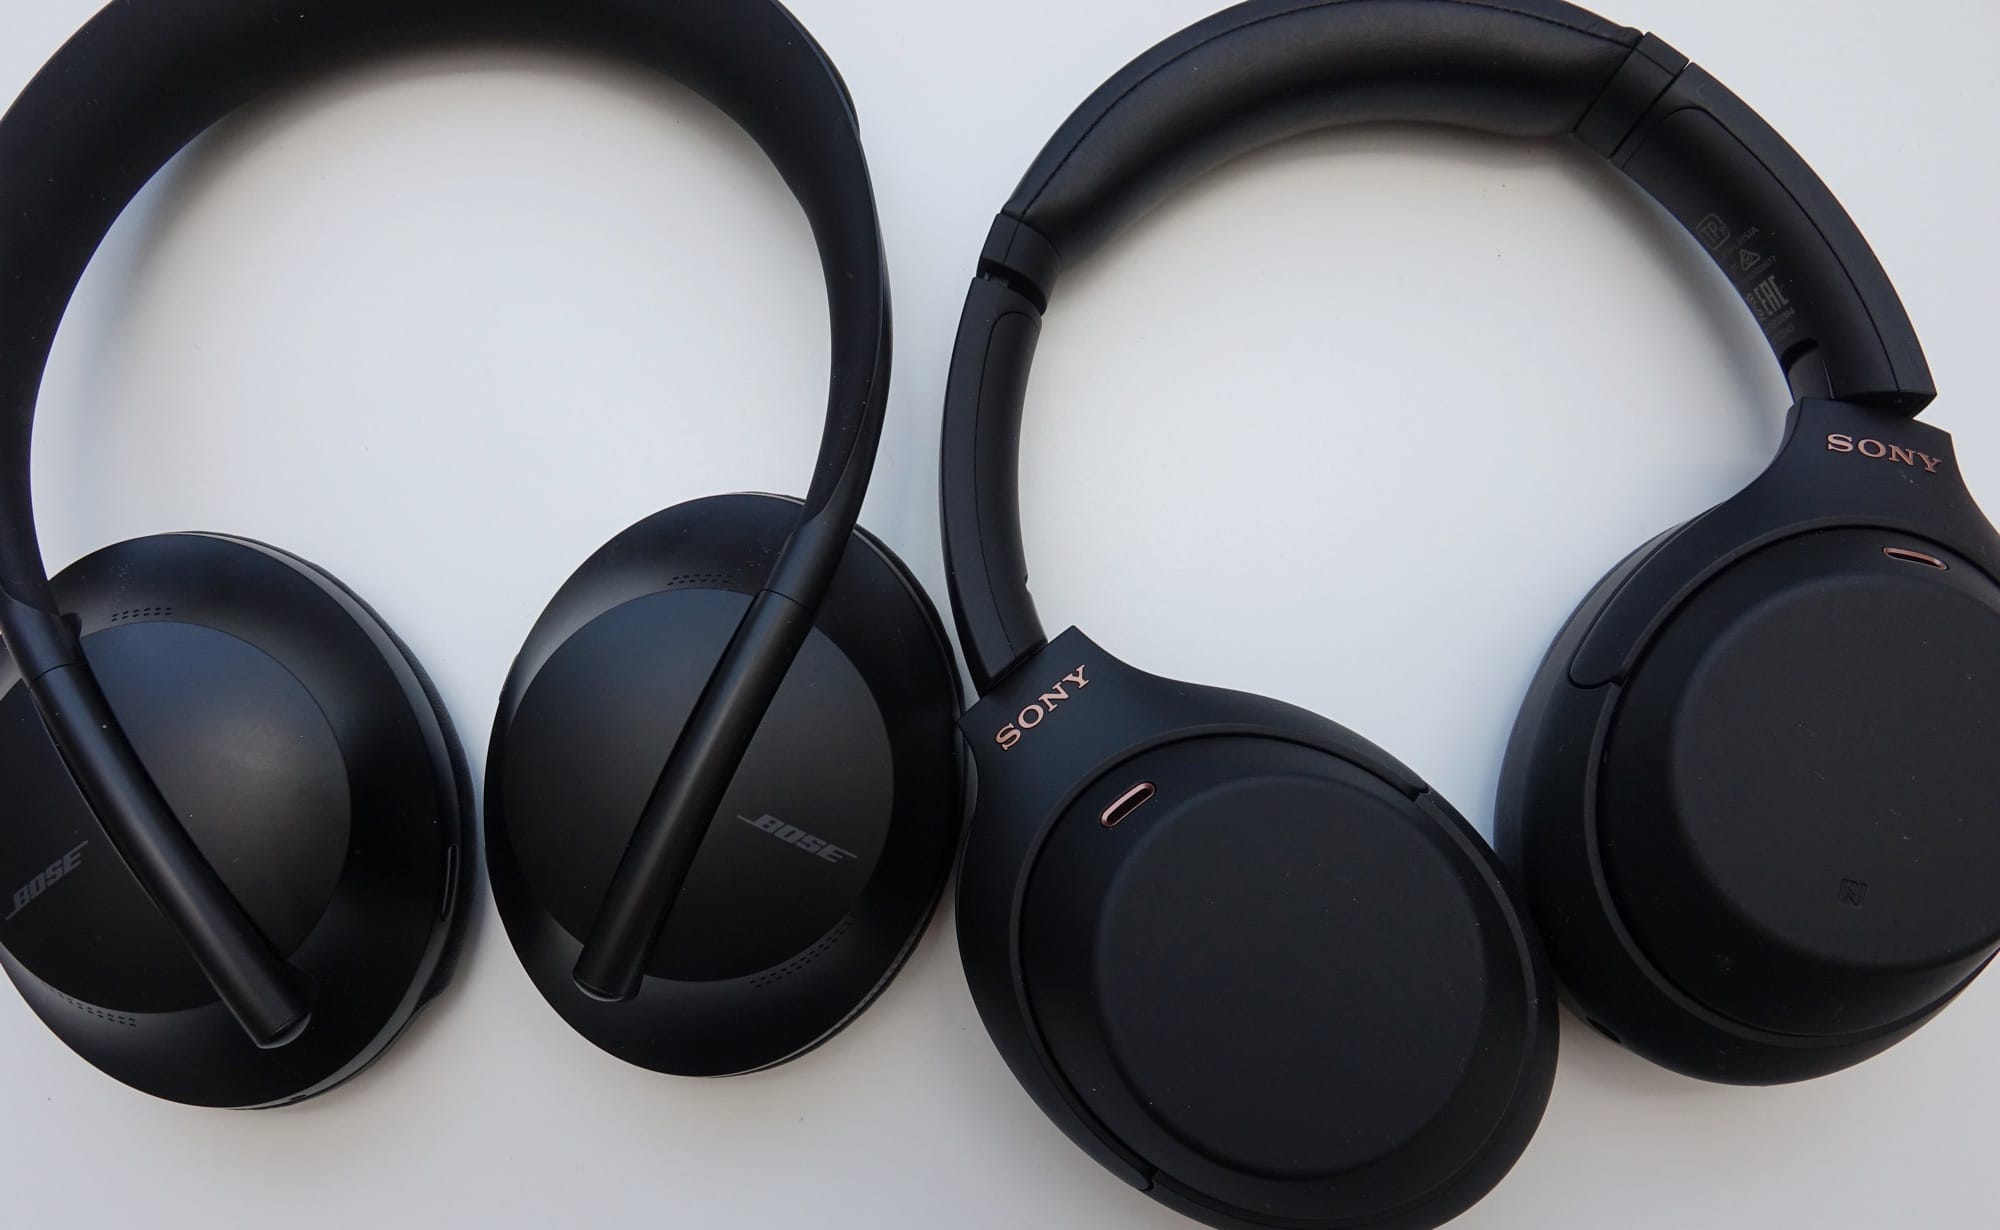 Bose 700 Noise Cancelling Headphones vs Sony WH-1000XM4 Noise Cancelling Headphones